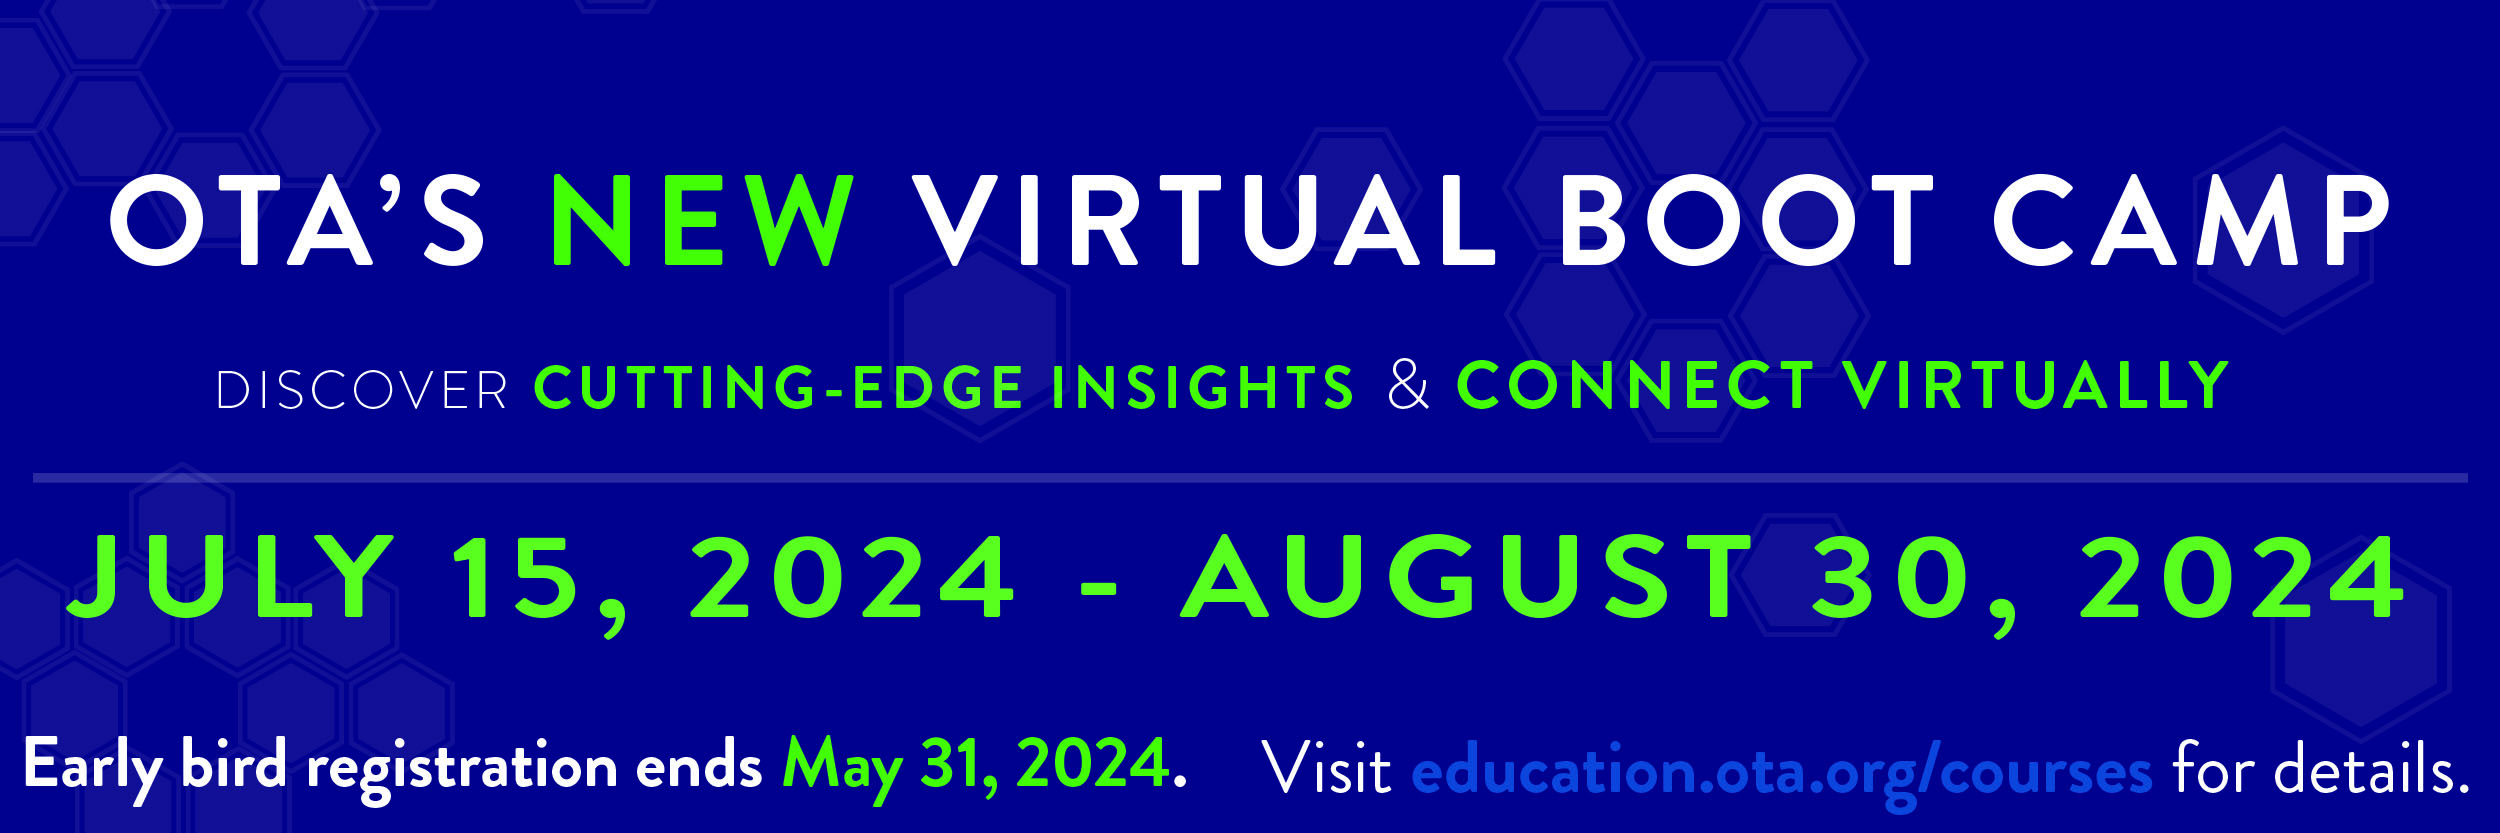 2024 virtual boot camp